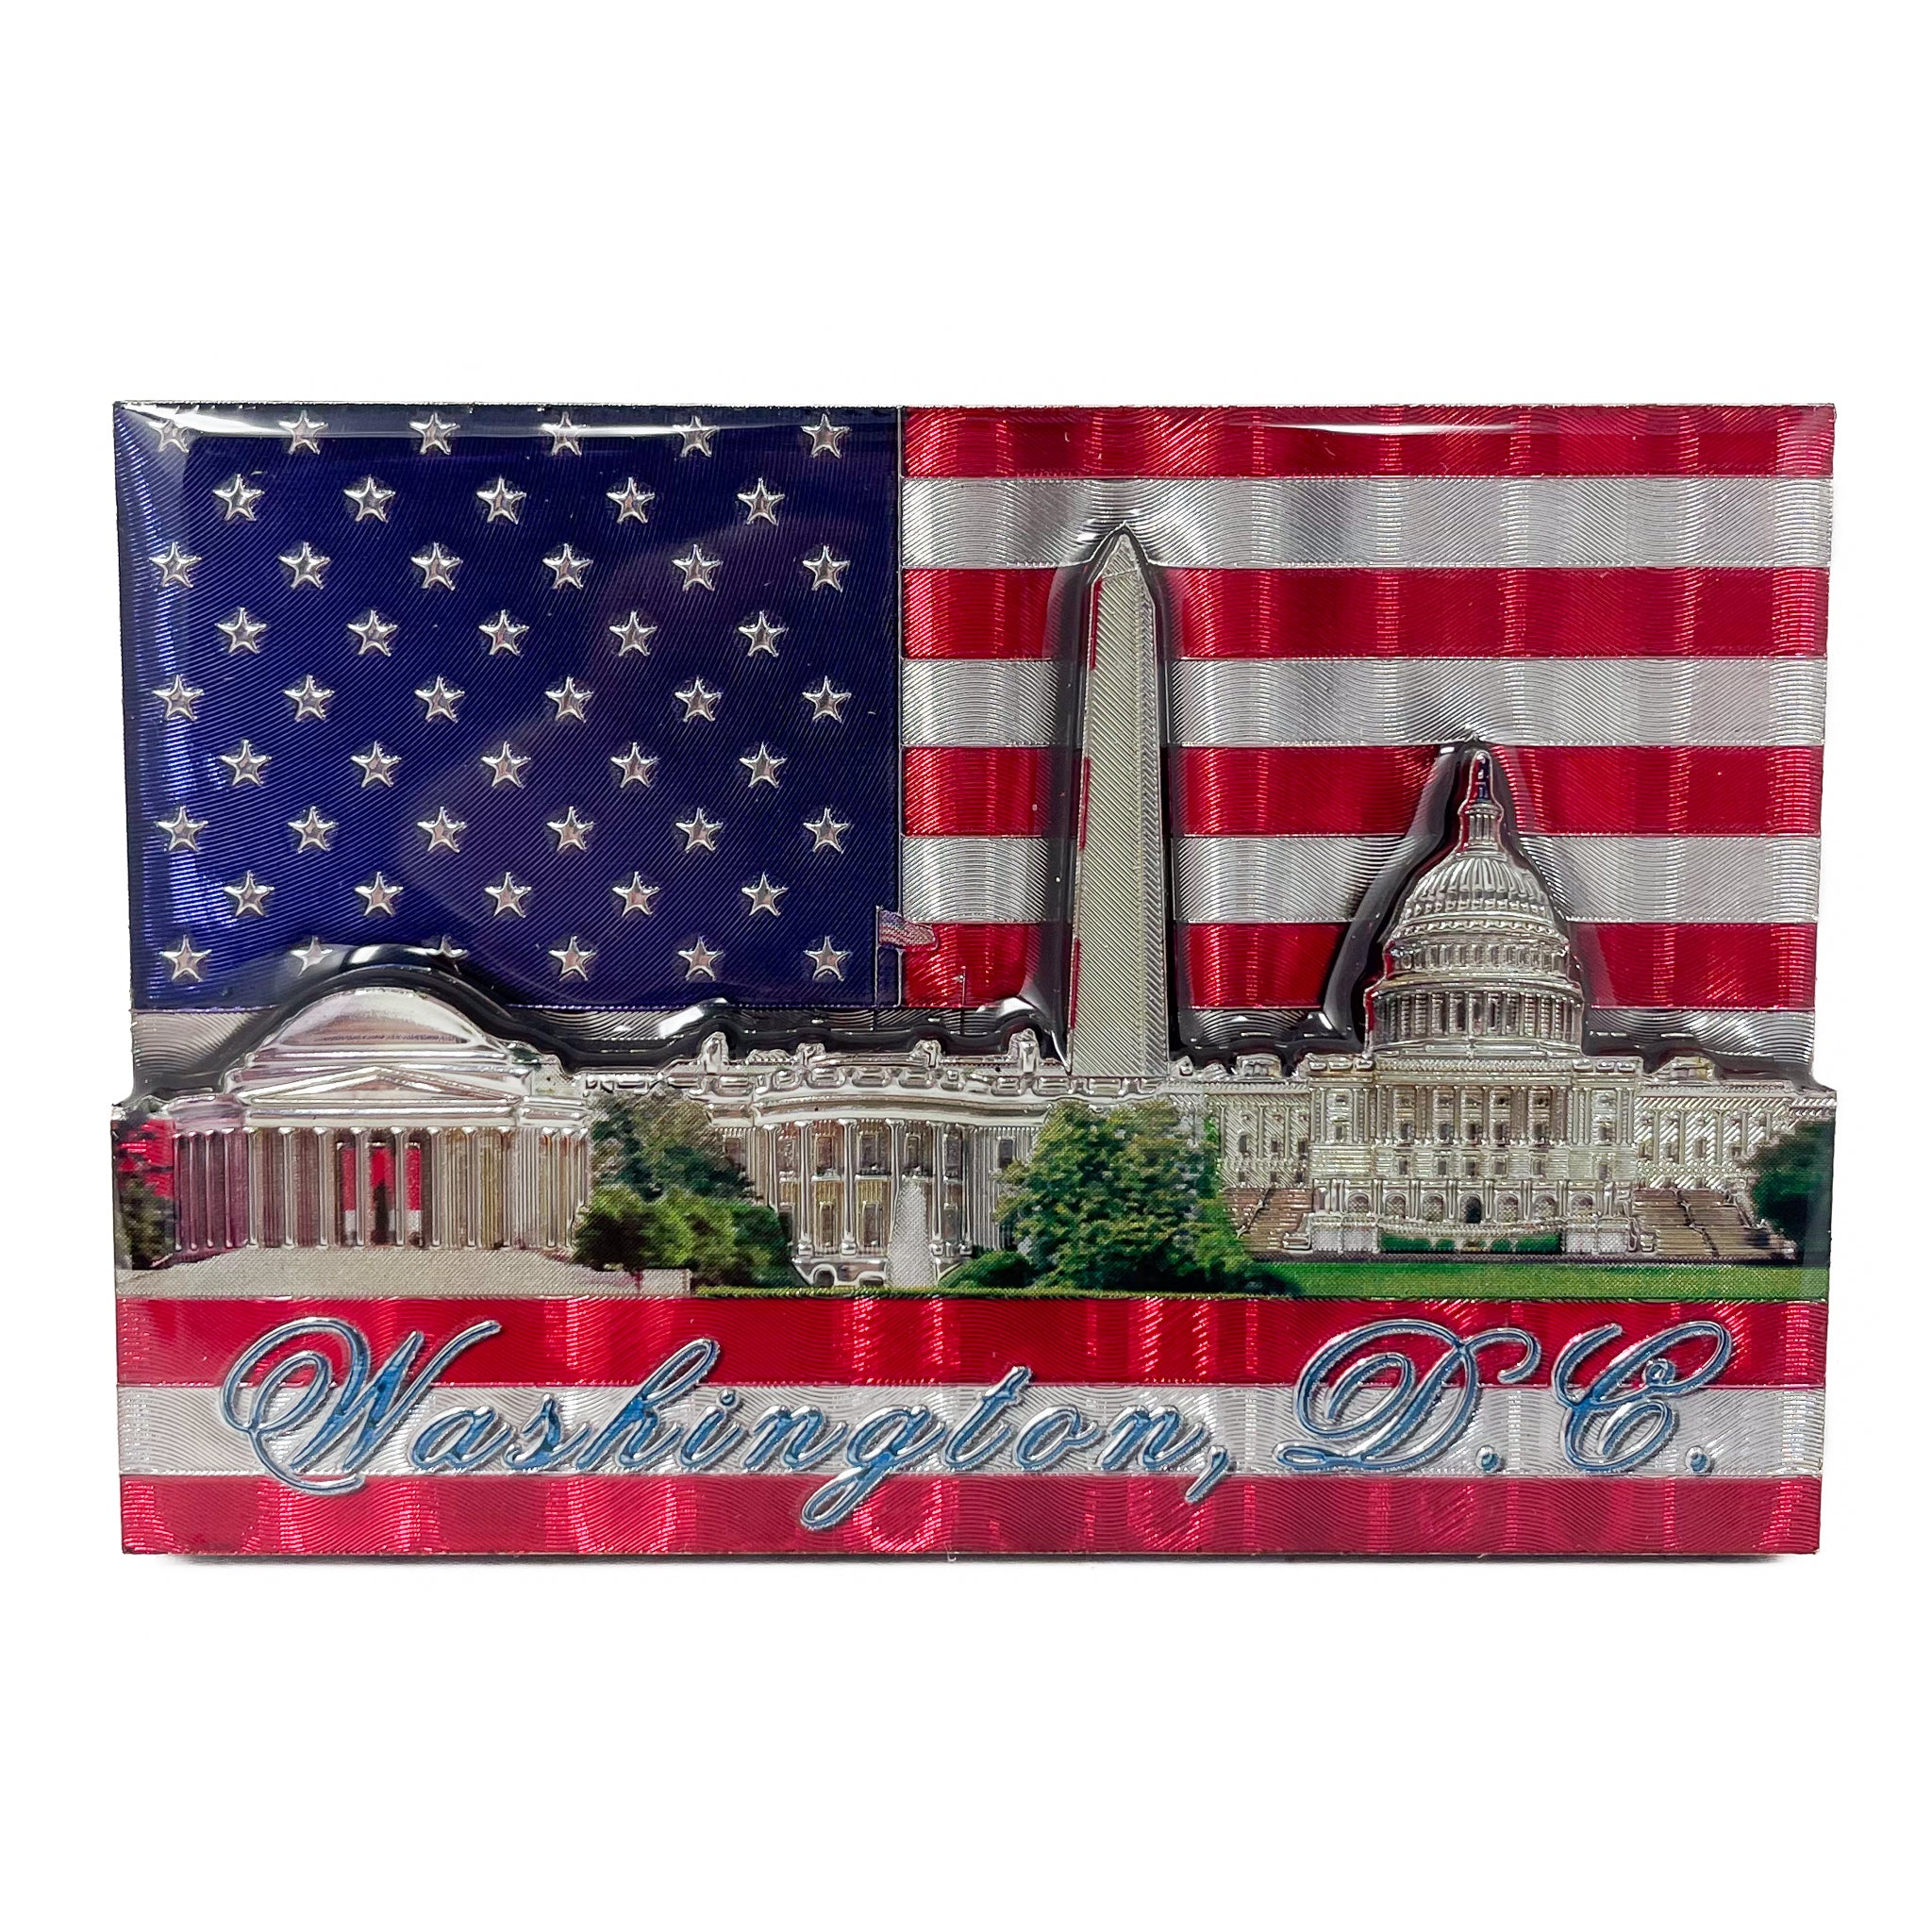 All American Washington D.C. Magnet